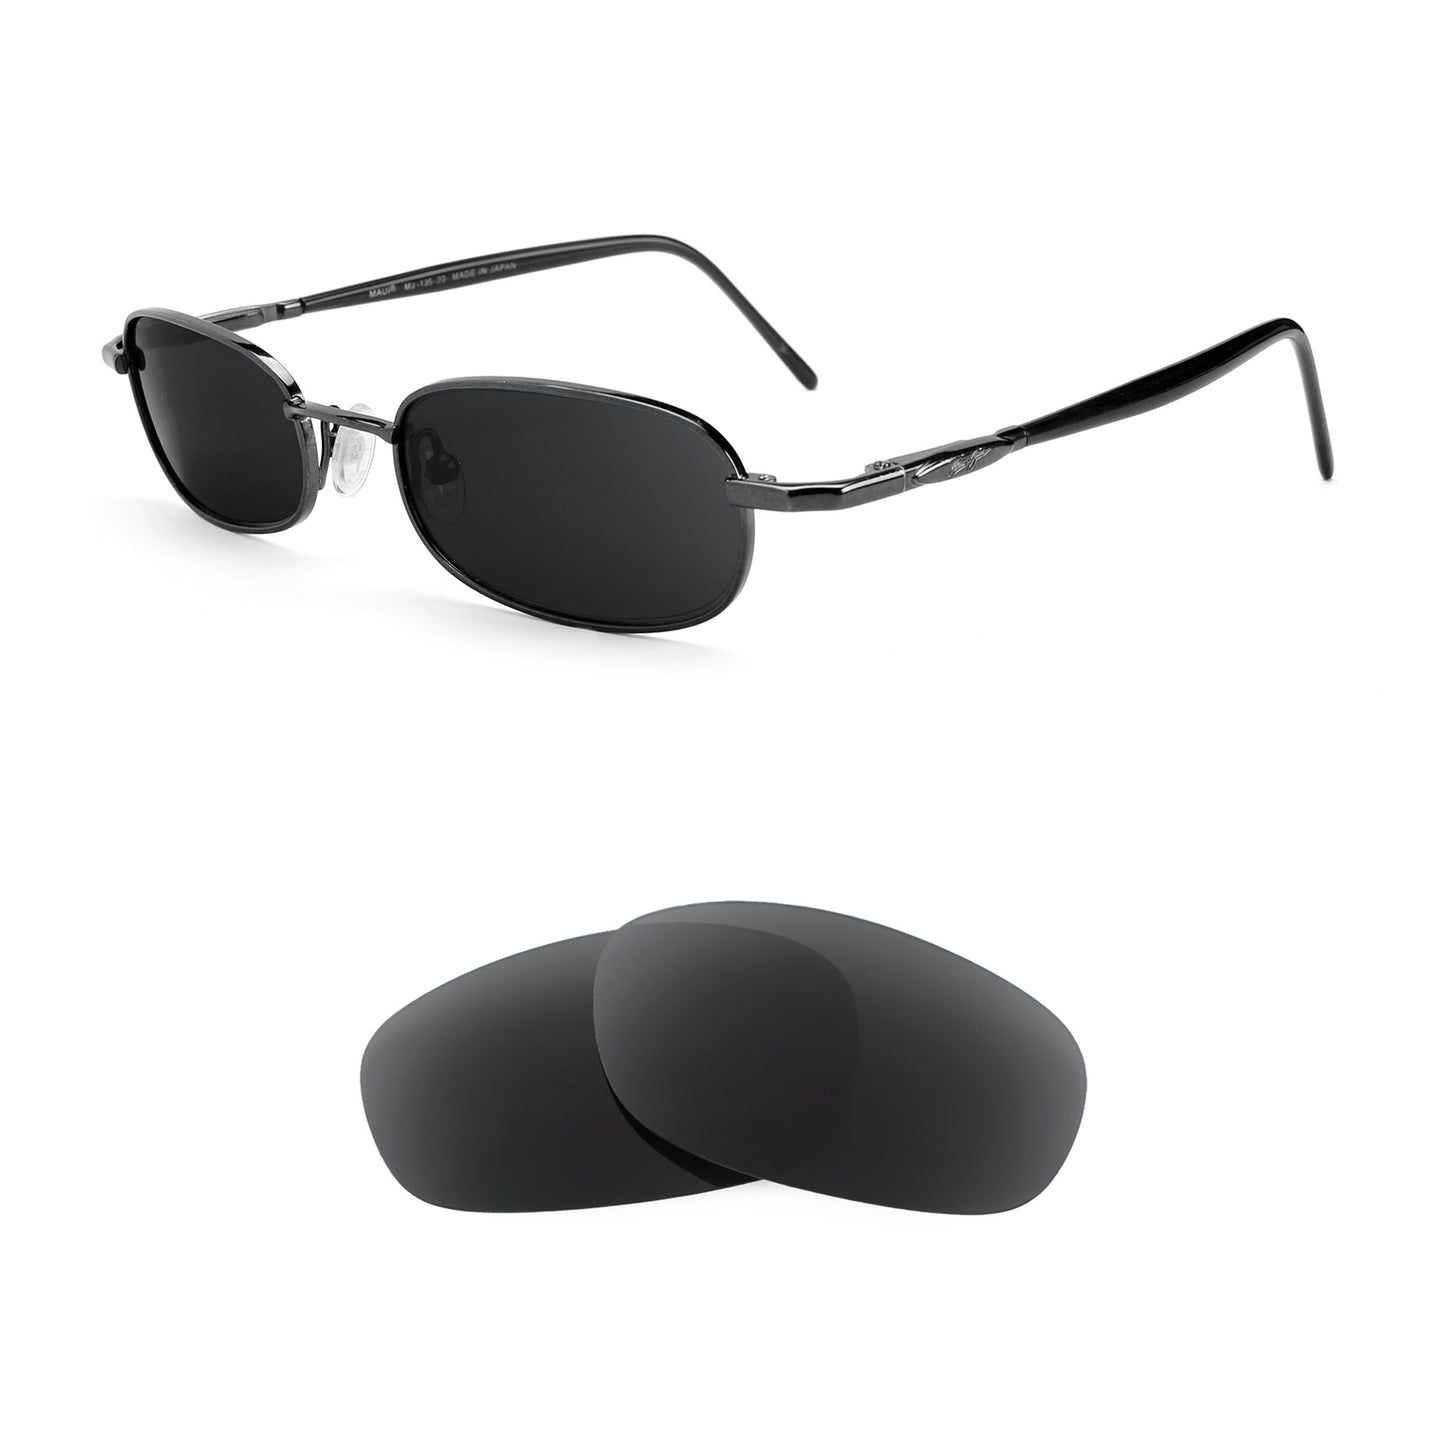 Maui Jim Manini MJ135 sunglasses with replacement lenses